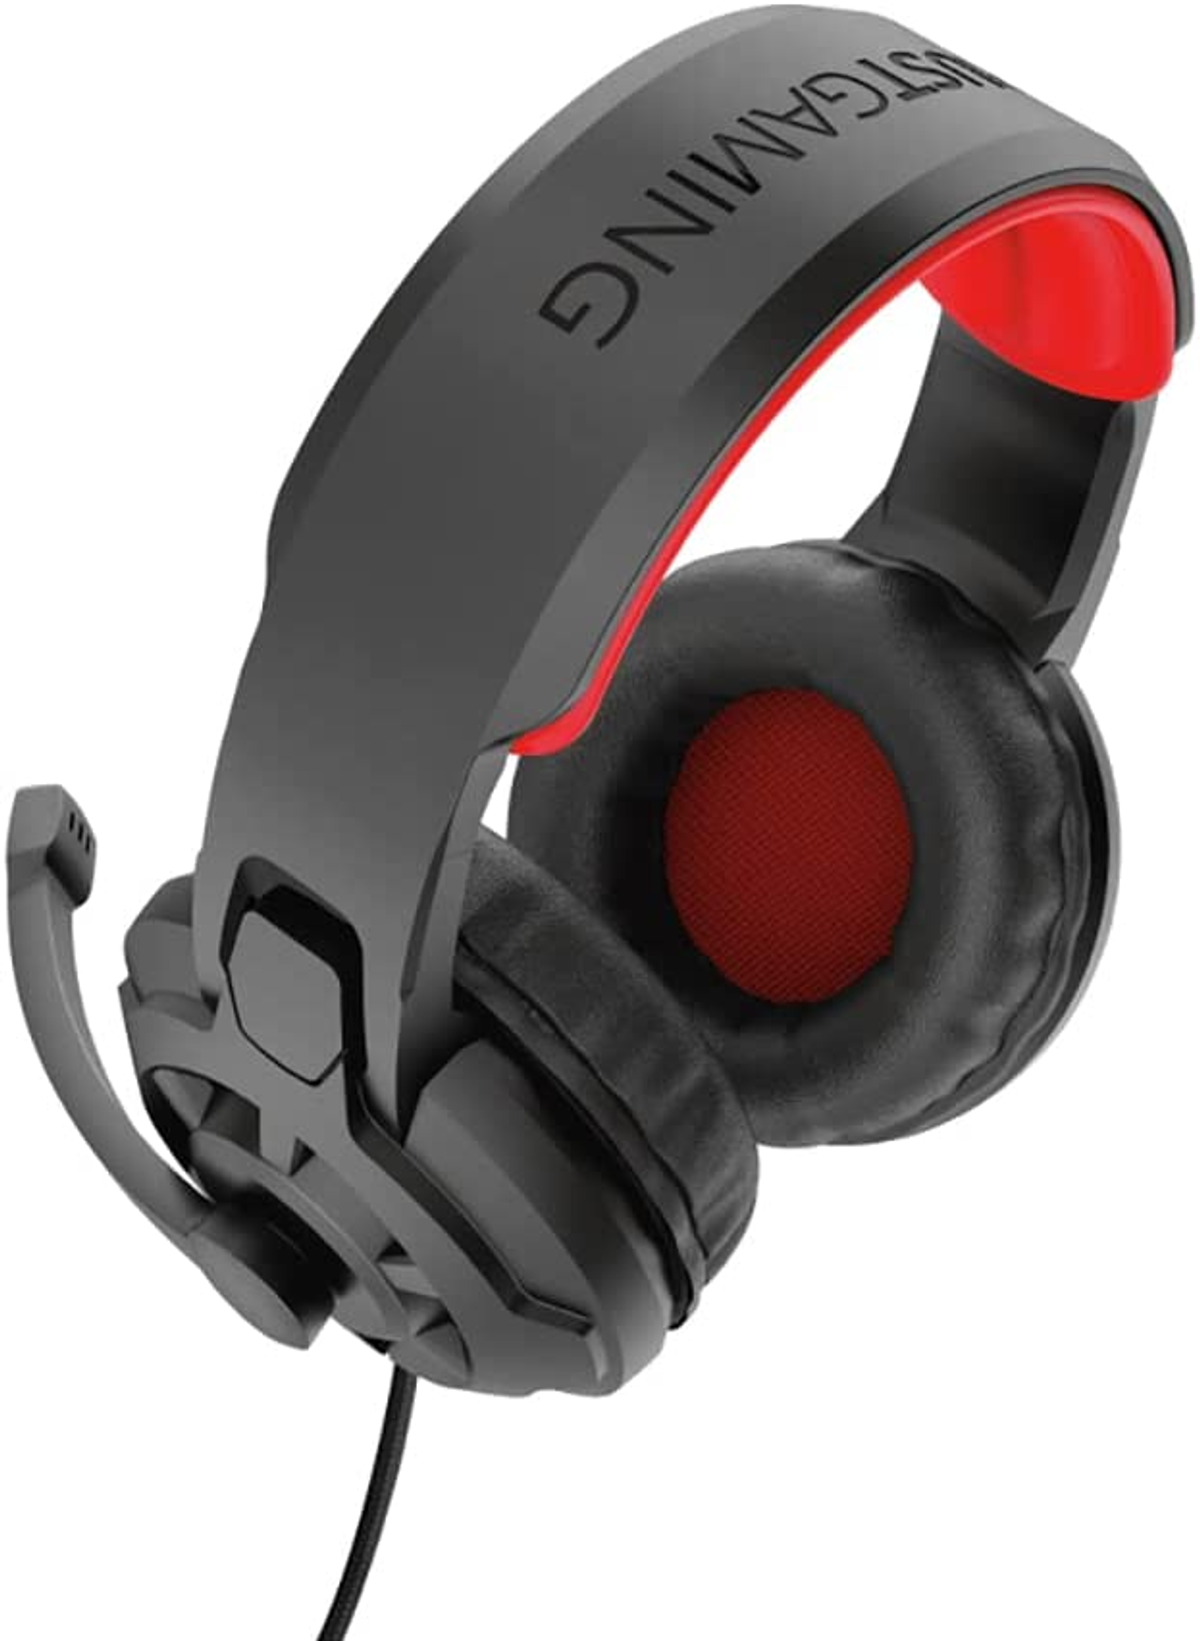 TRUST 24076 GXT Headset Schwarz Gaming 411 On-ear RADIUS